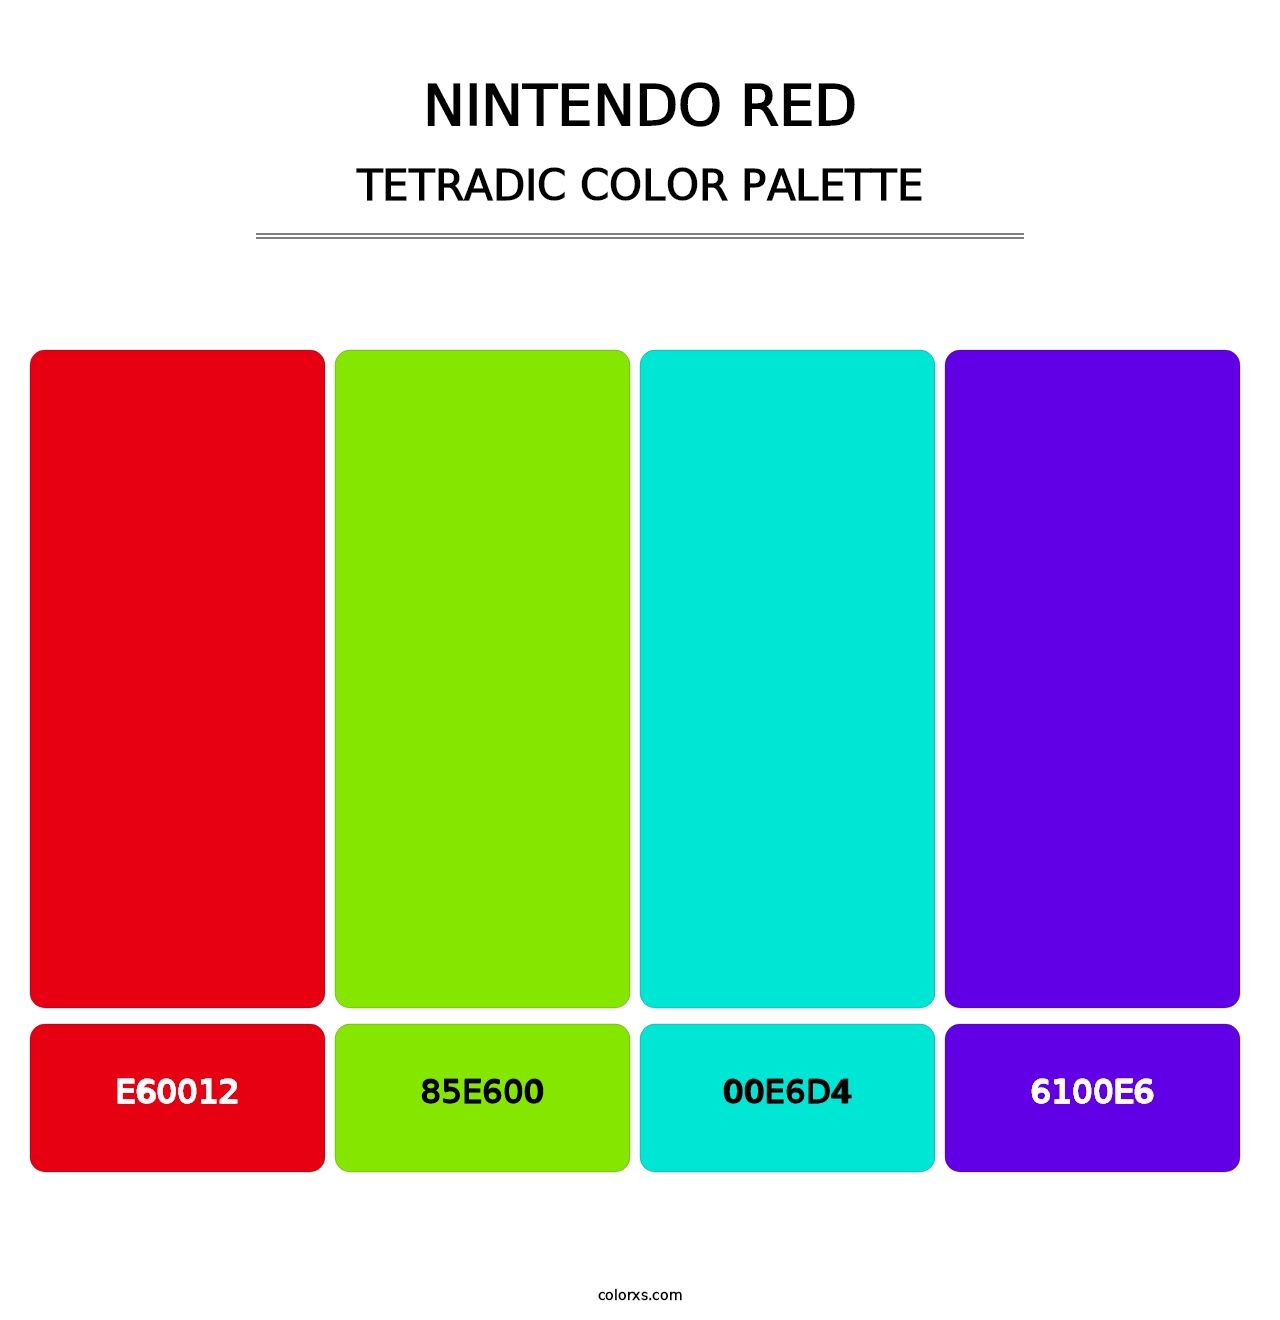 Nintendo Red - Tetradic Color Palette